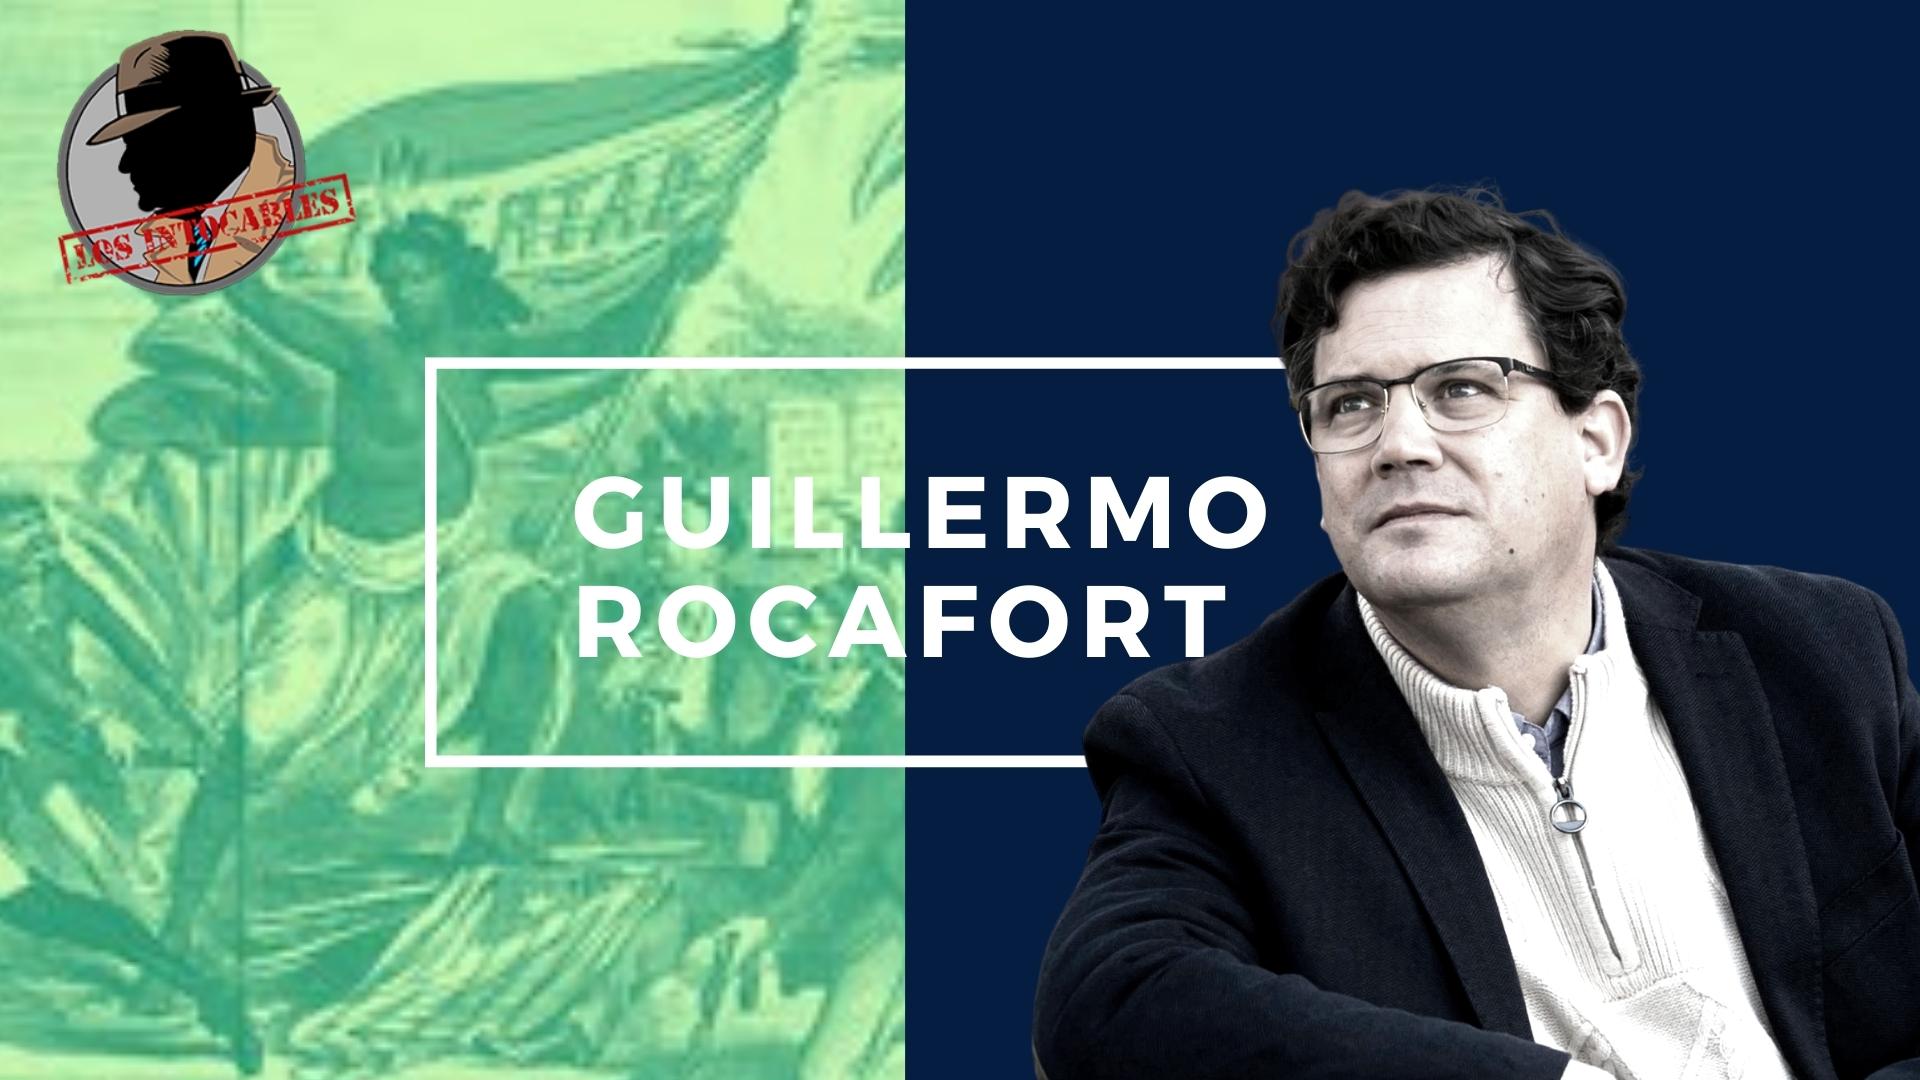 Guillermo Rocafort